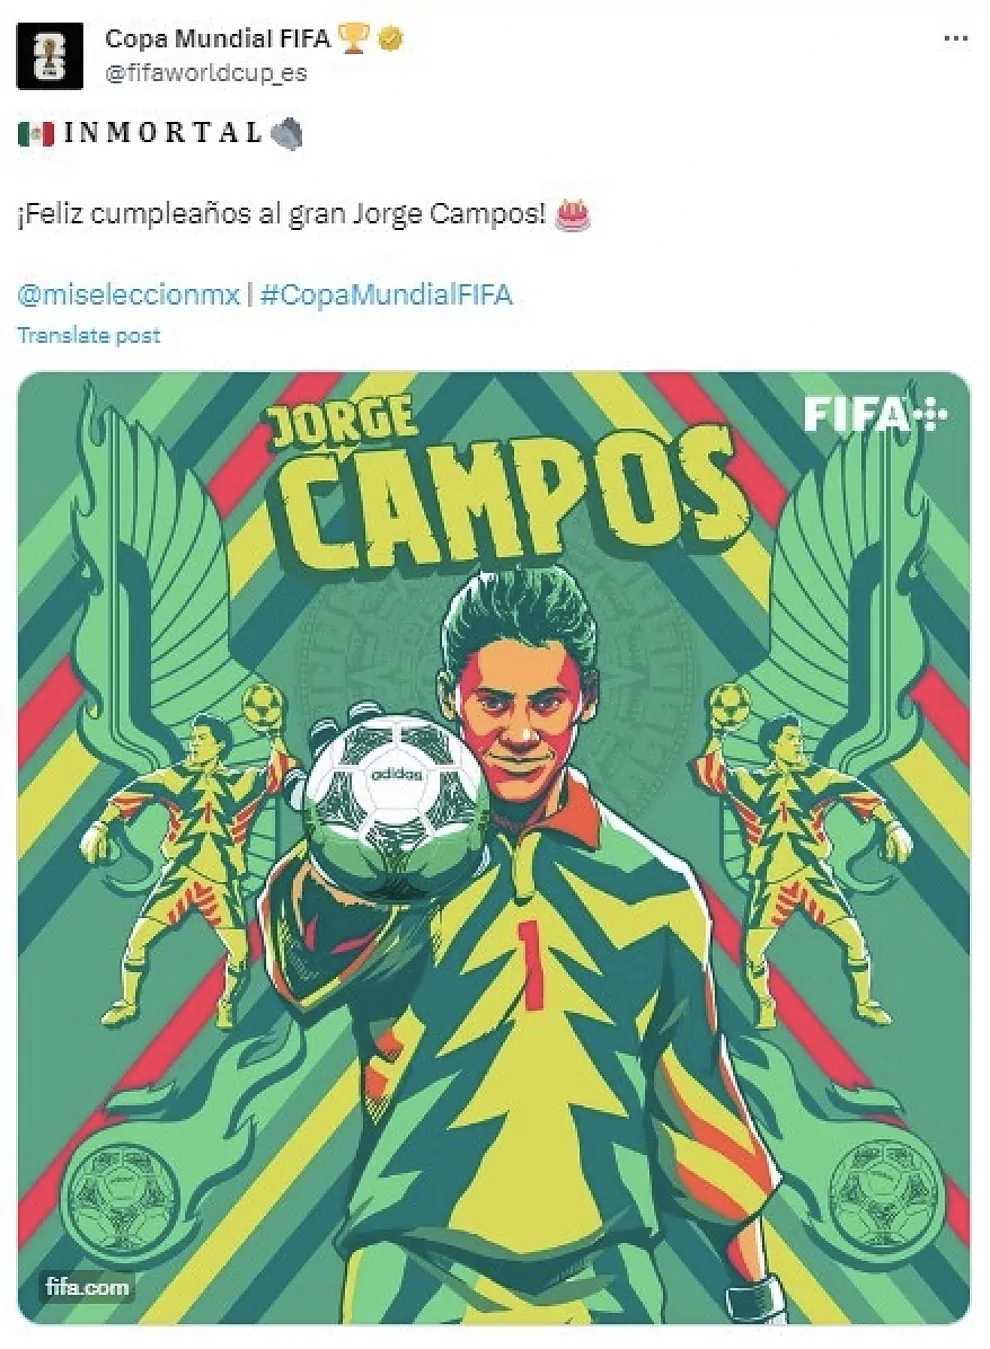 La postal que compartió FIFA en sus redes